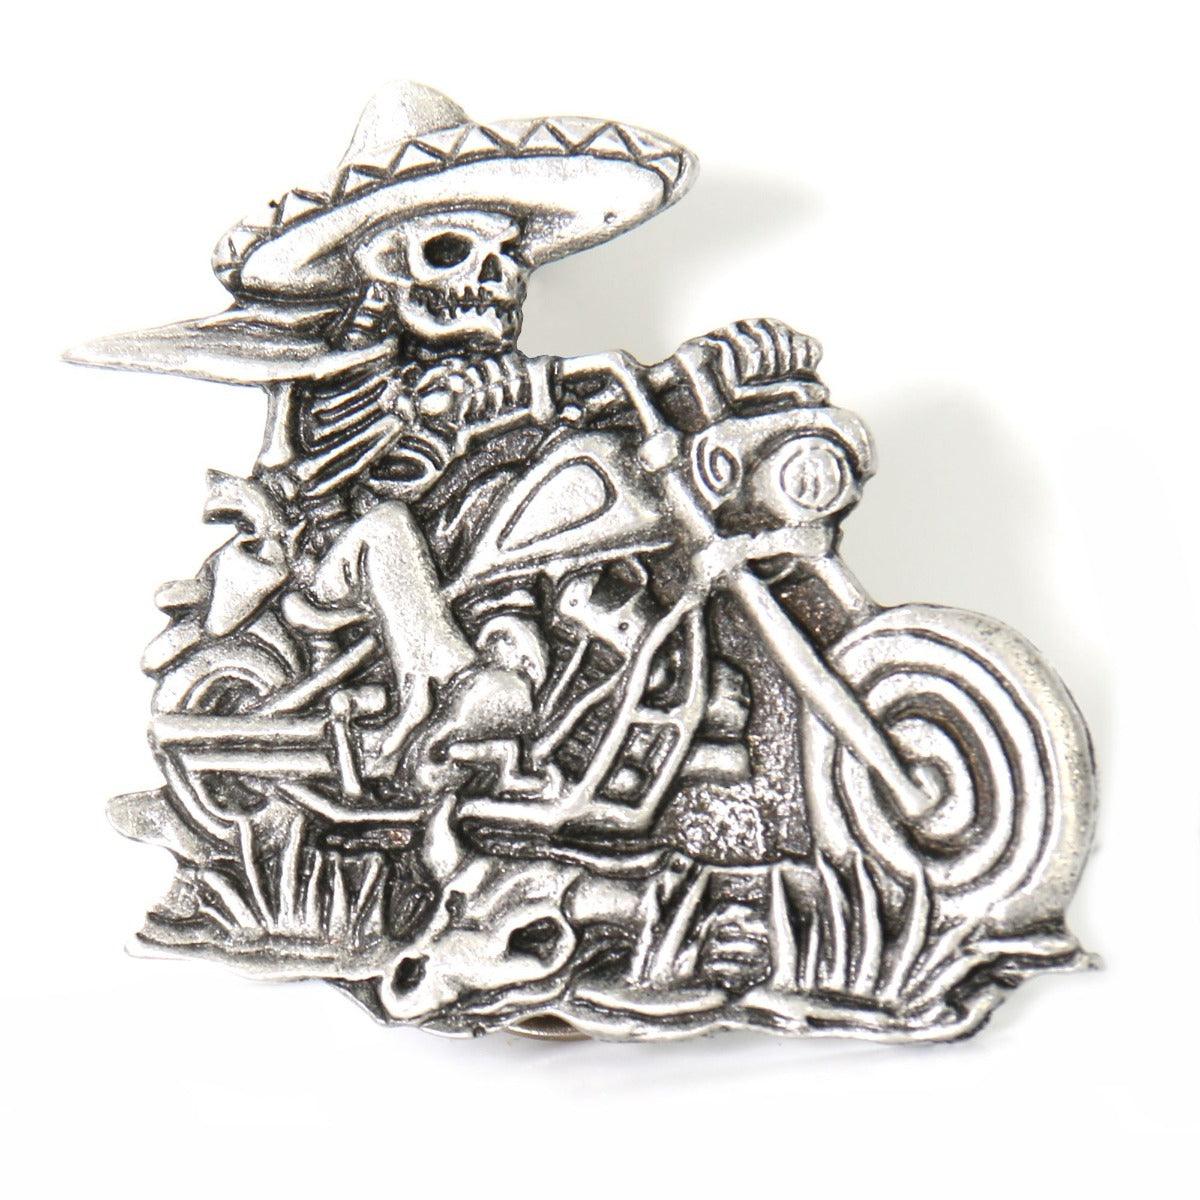 Hot Leathers Sombrero Skeleton Rider Pin - American Legend Rider